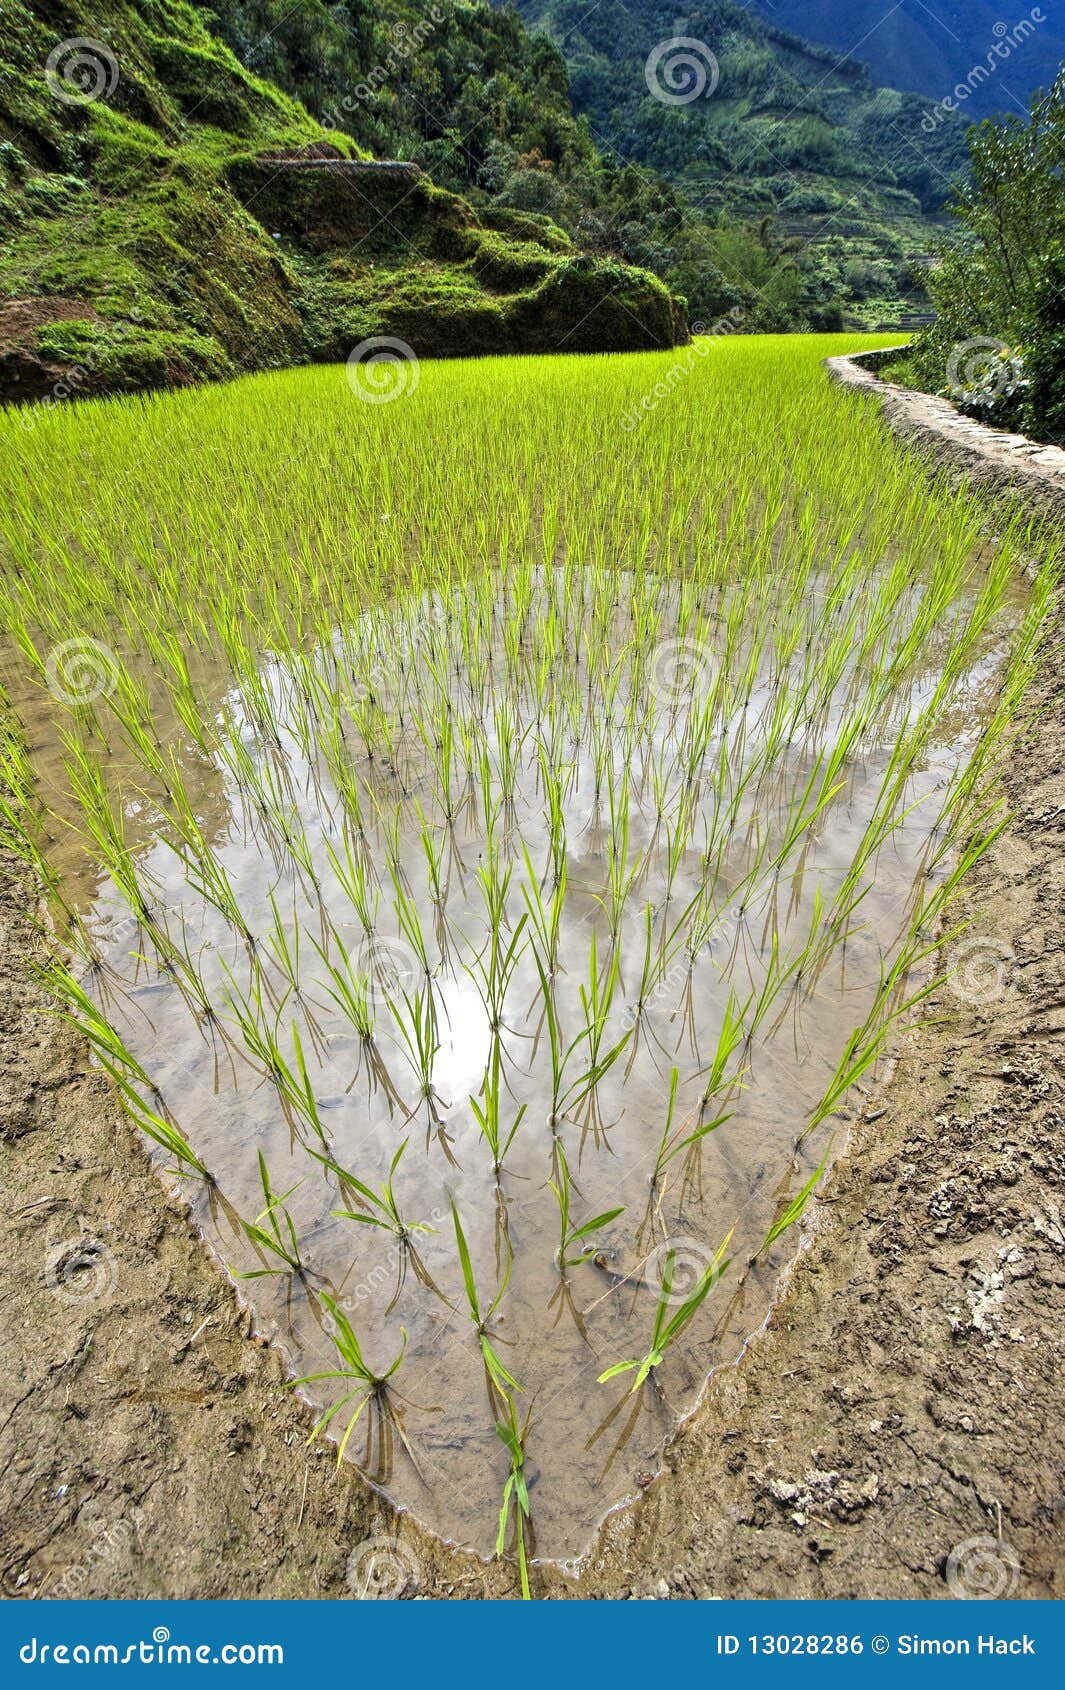 philippines rice seedlings